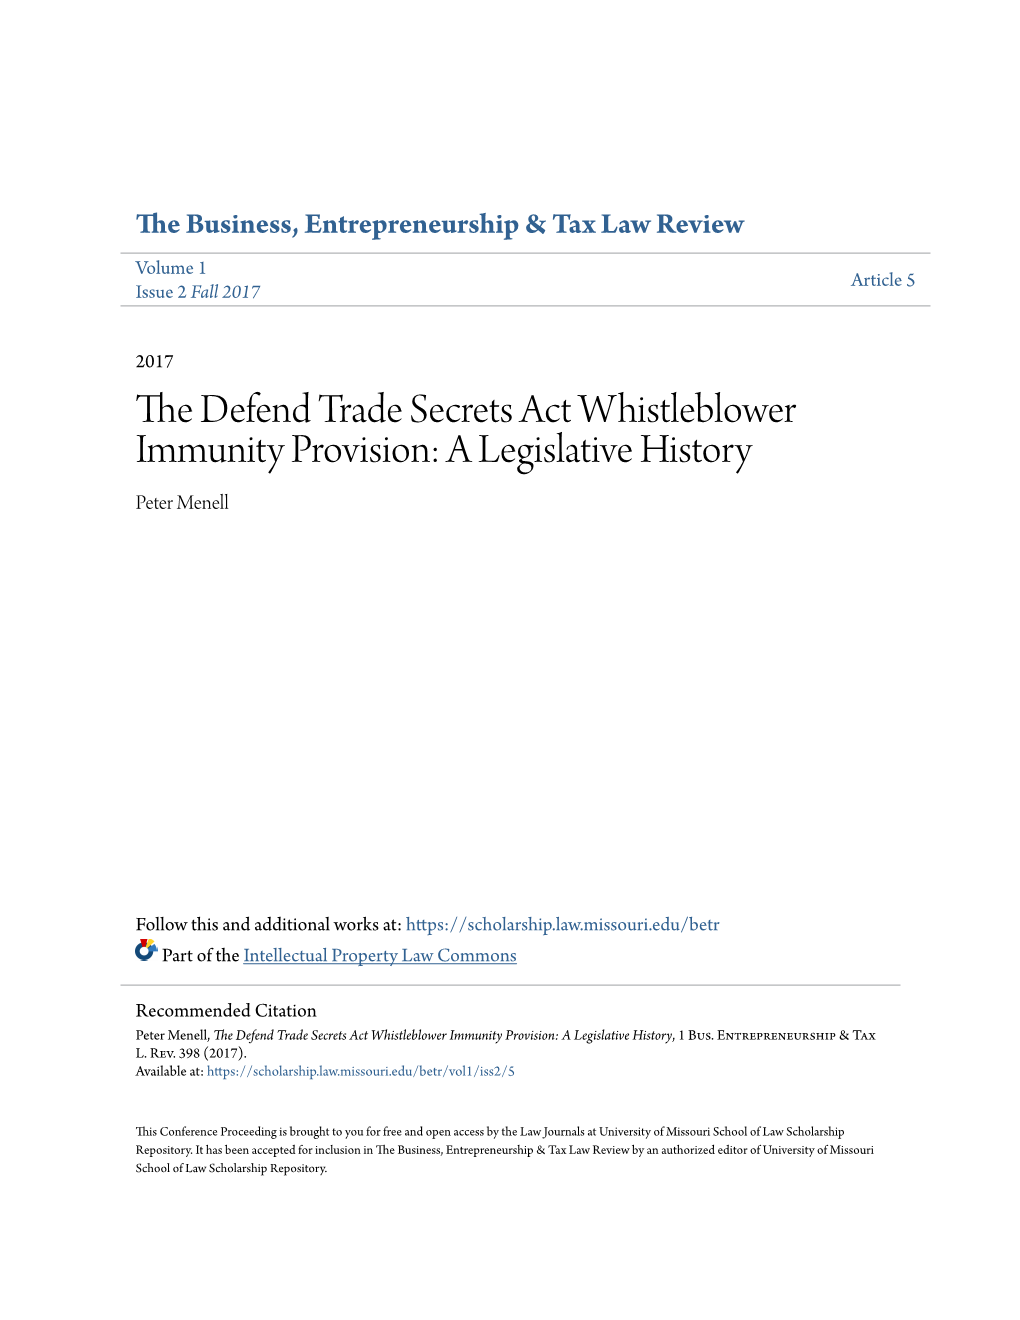 The Defend Trade Secrets Act Whistleblower Immunity Provision: a Legislative History, 1 Bus